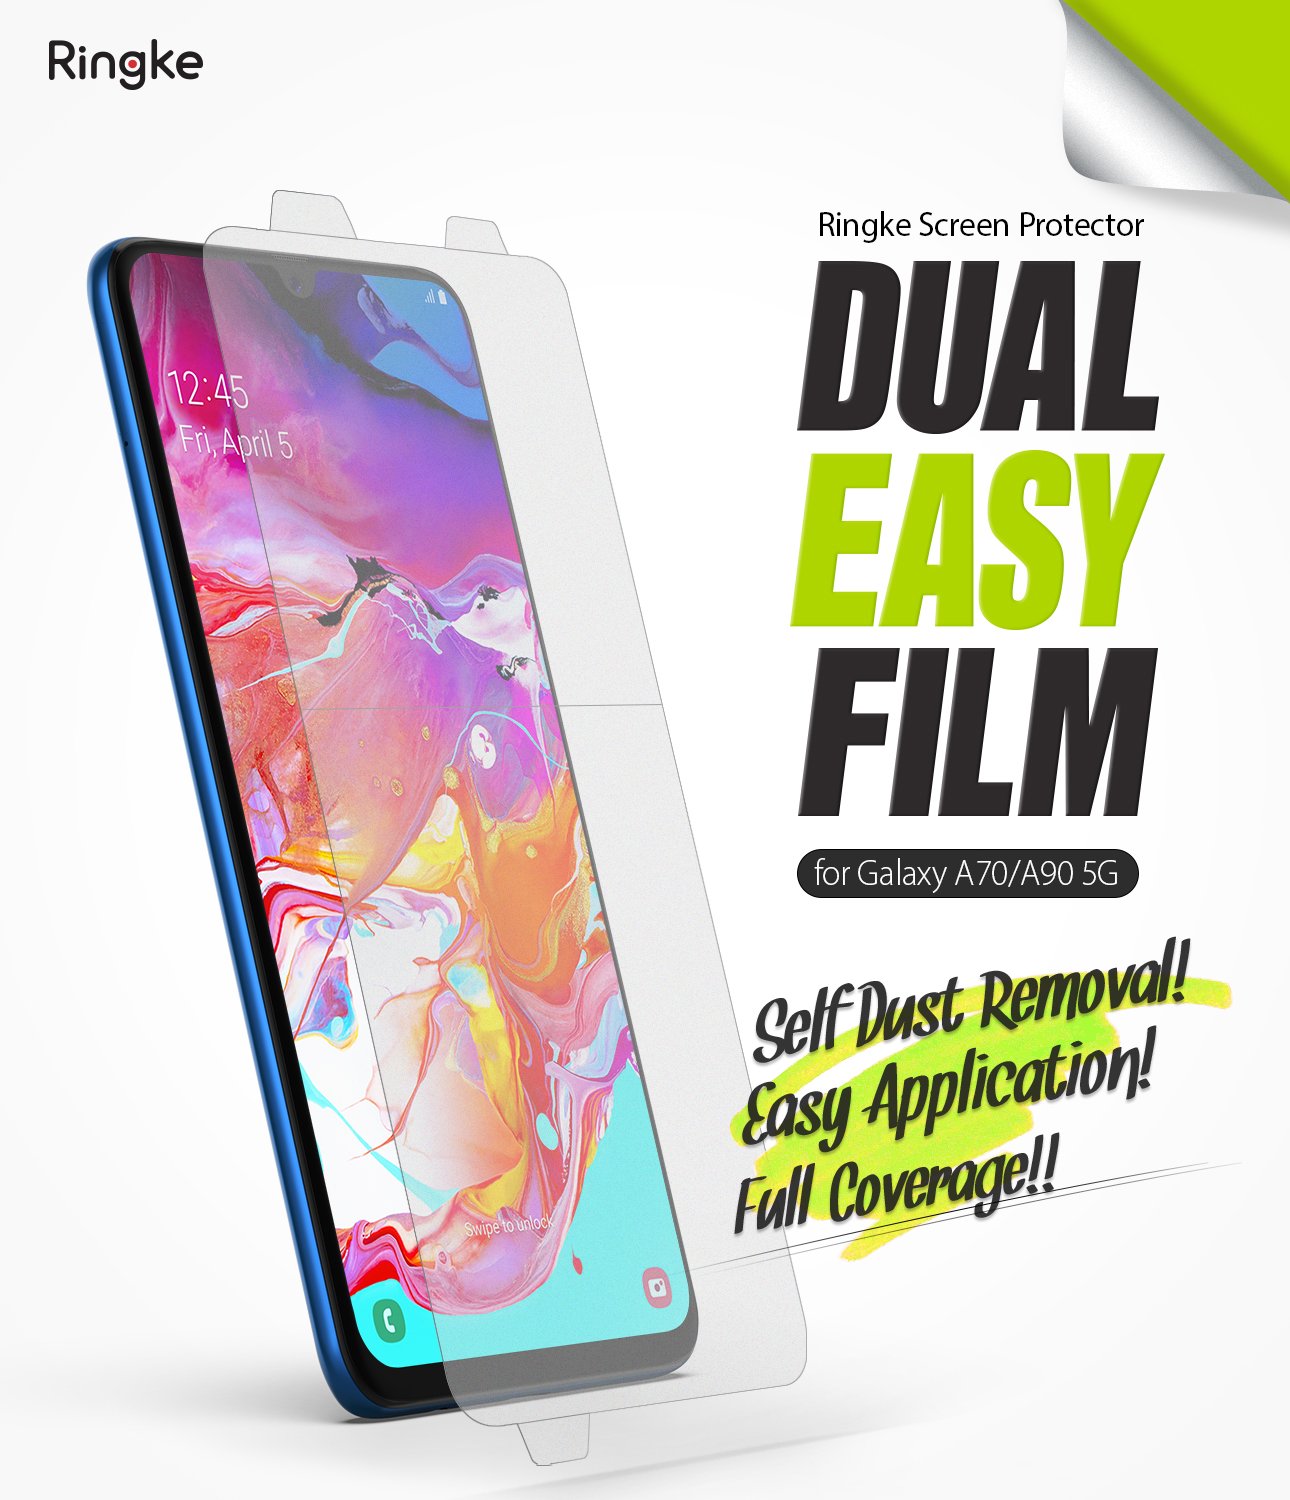 Ringke Galaxy A70 Dual Easy Screen Protector